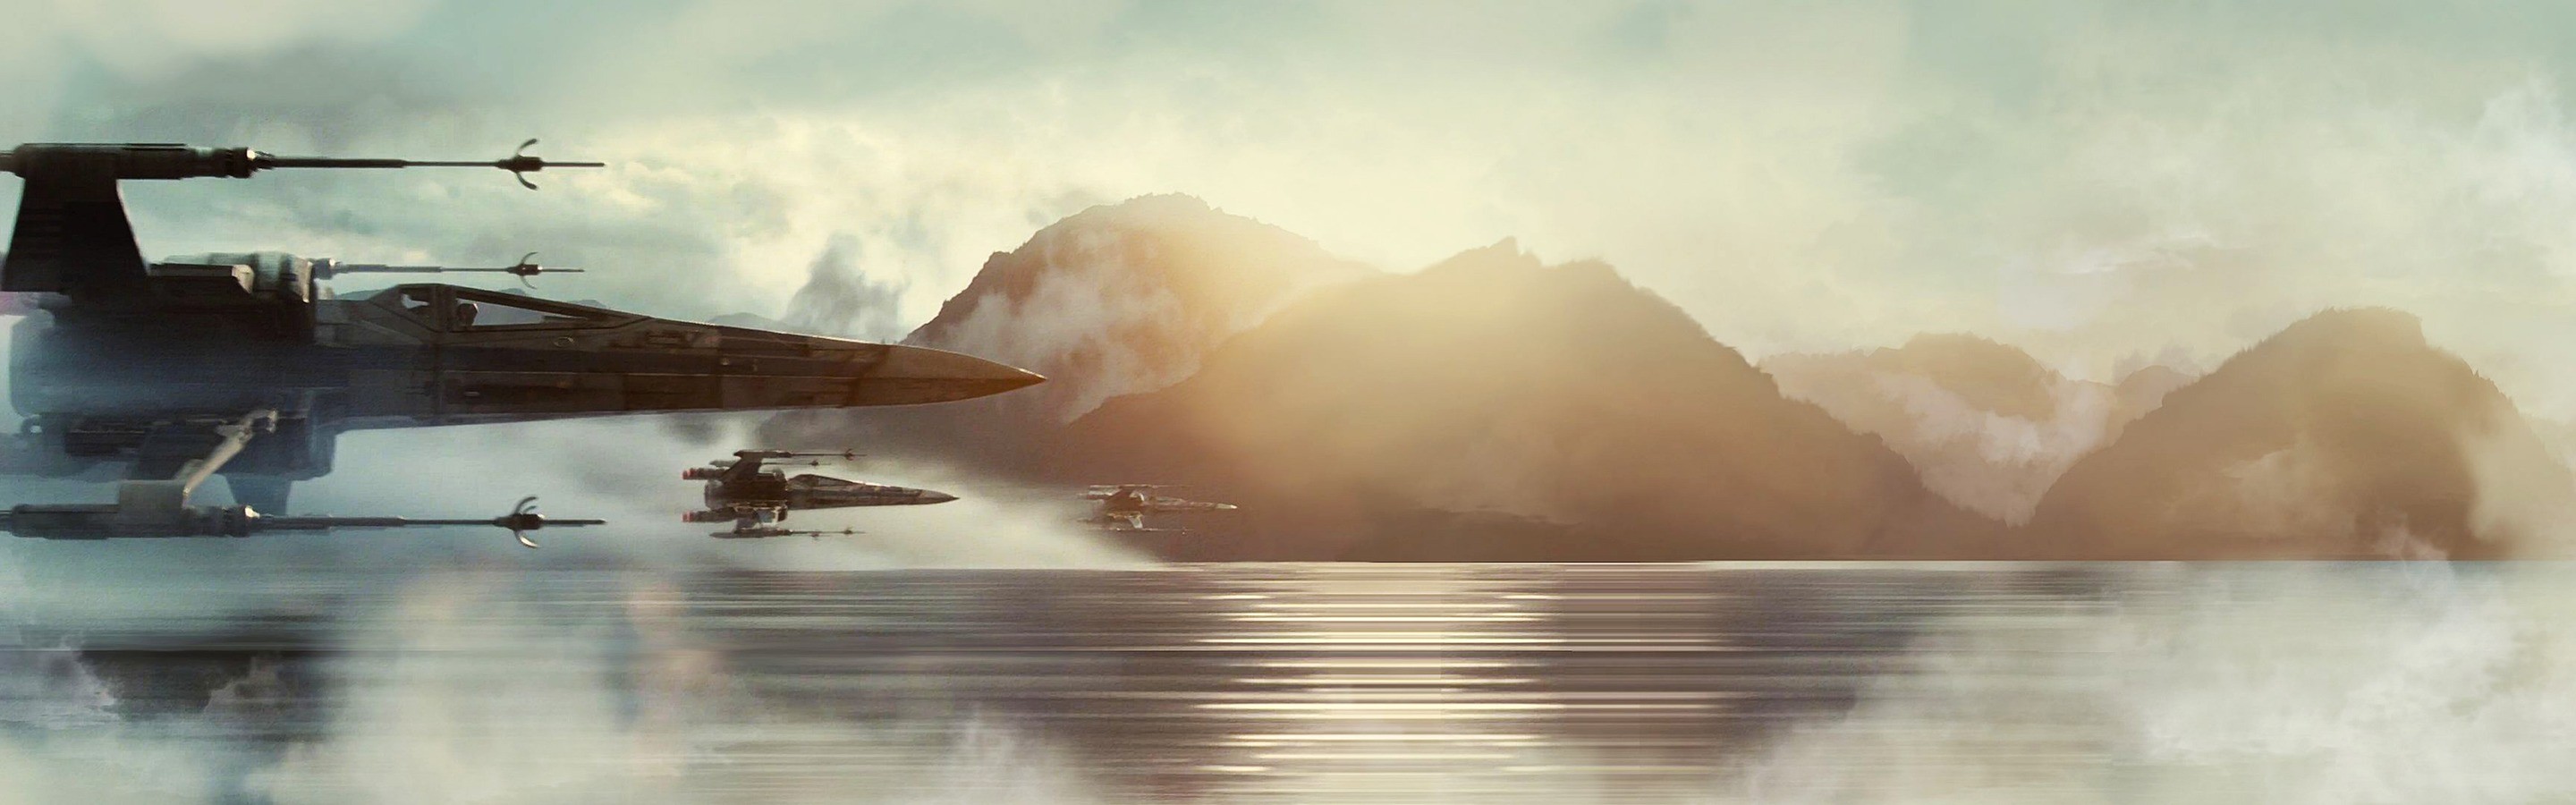 General 2880x900 ultrawide Star Wars X-wing Star Wars Ships movies Star Wars: The Force Awakens science fiction film stills